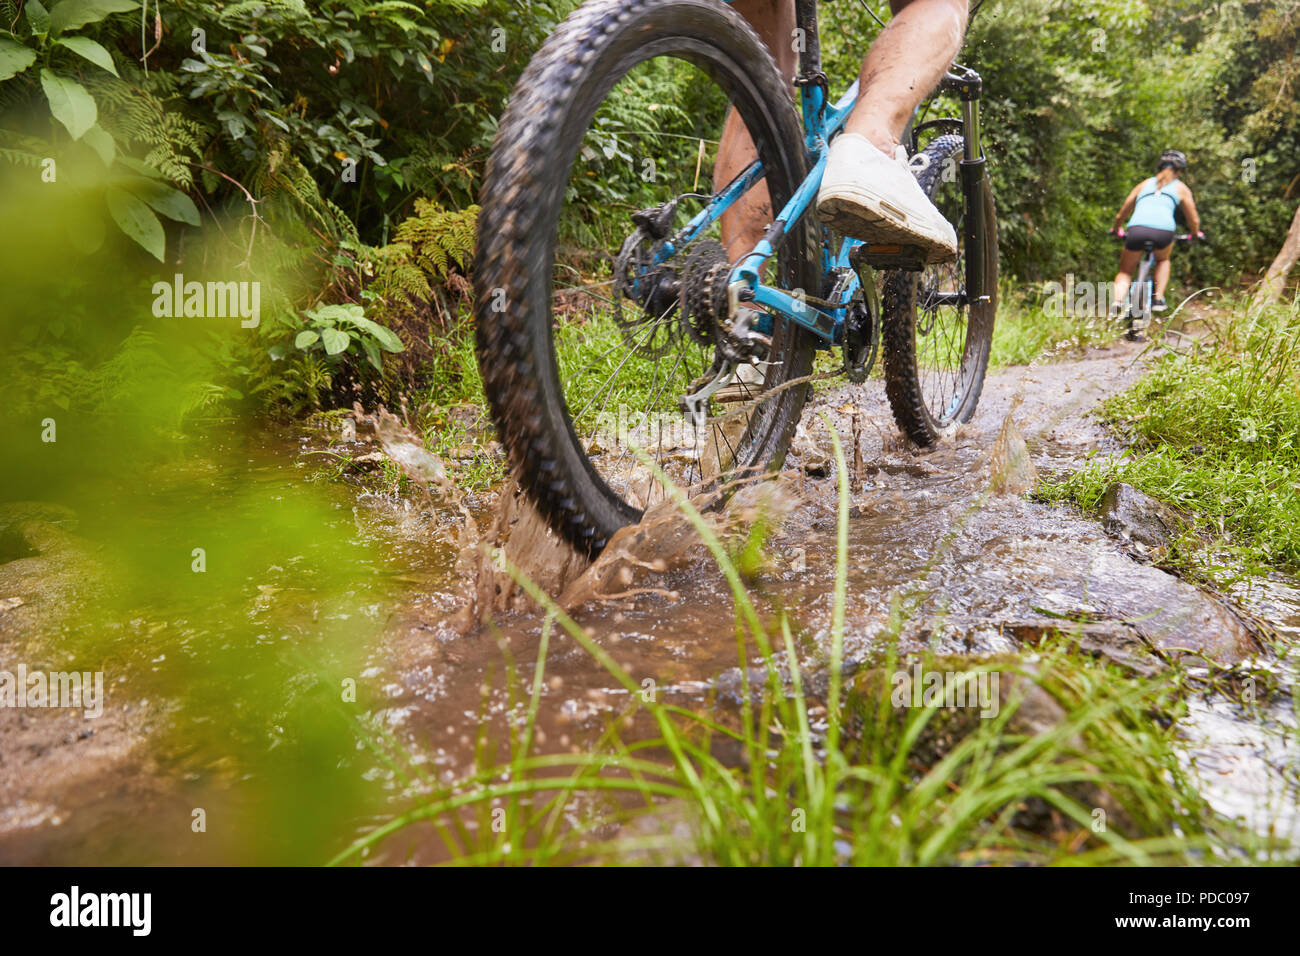 Man mountain biking, riding through puddle in woods Stock Photo